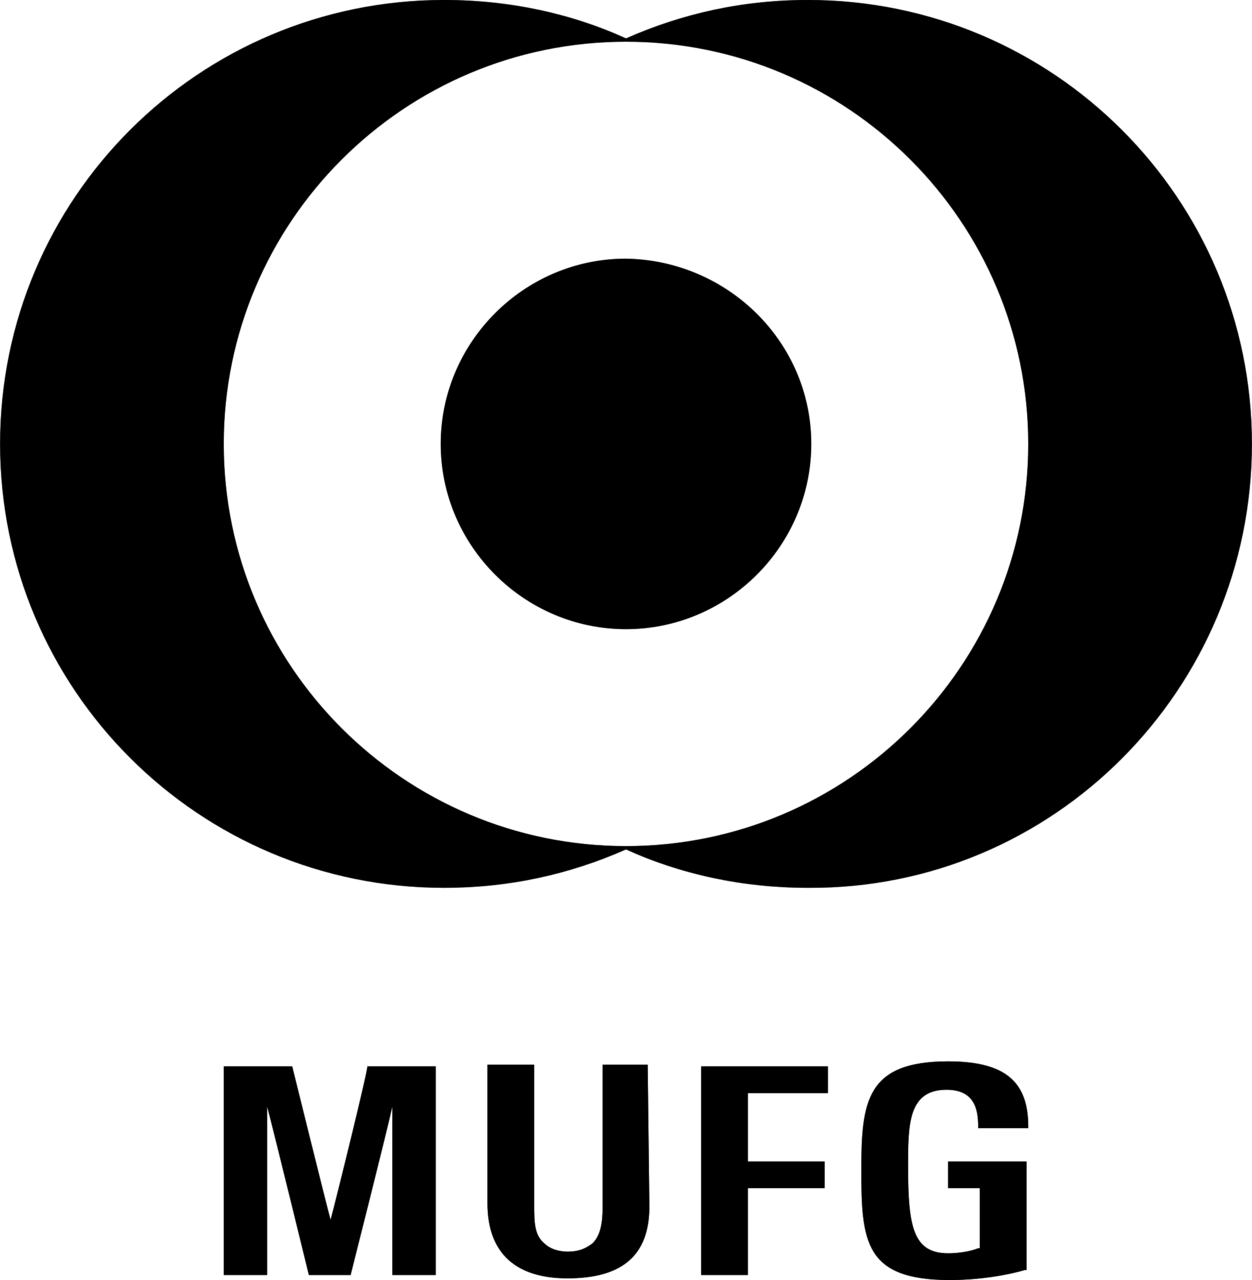 mufg-logo-black-and-white-1